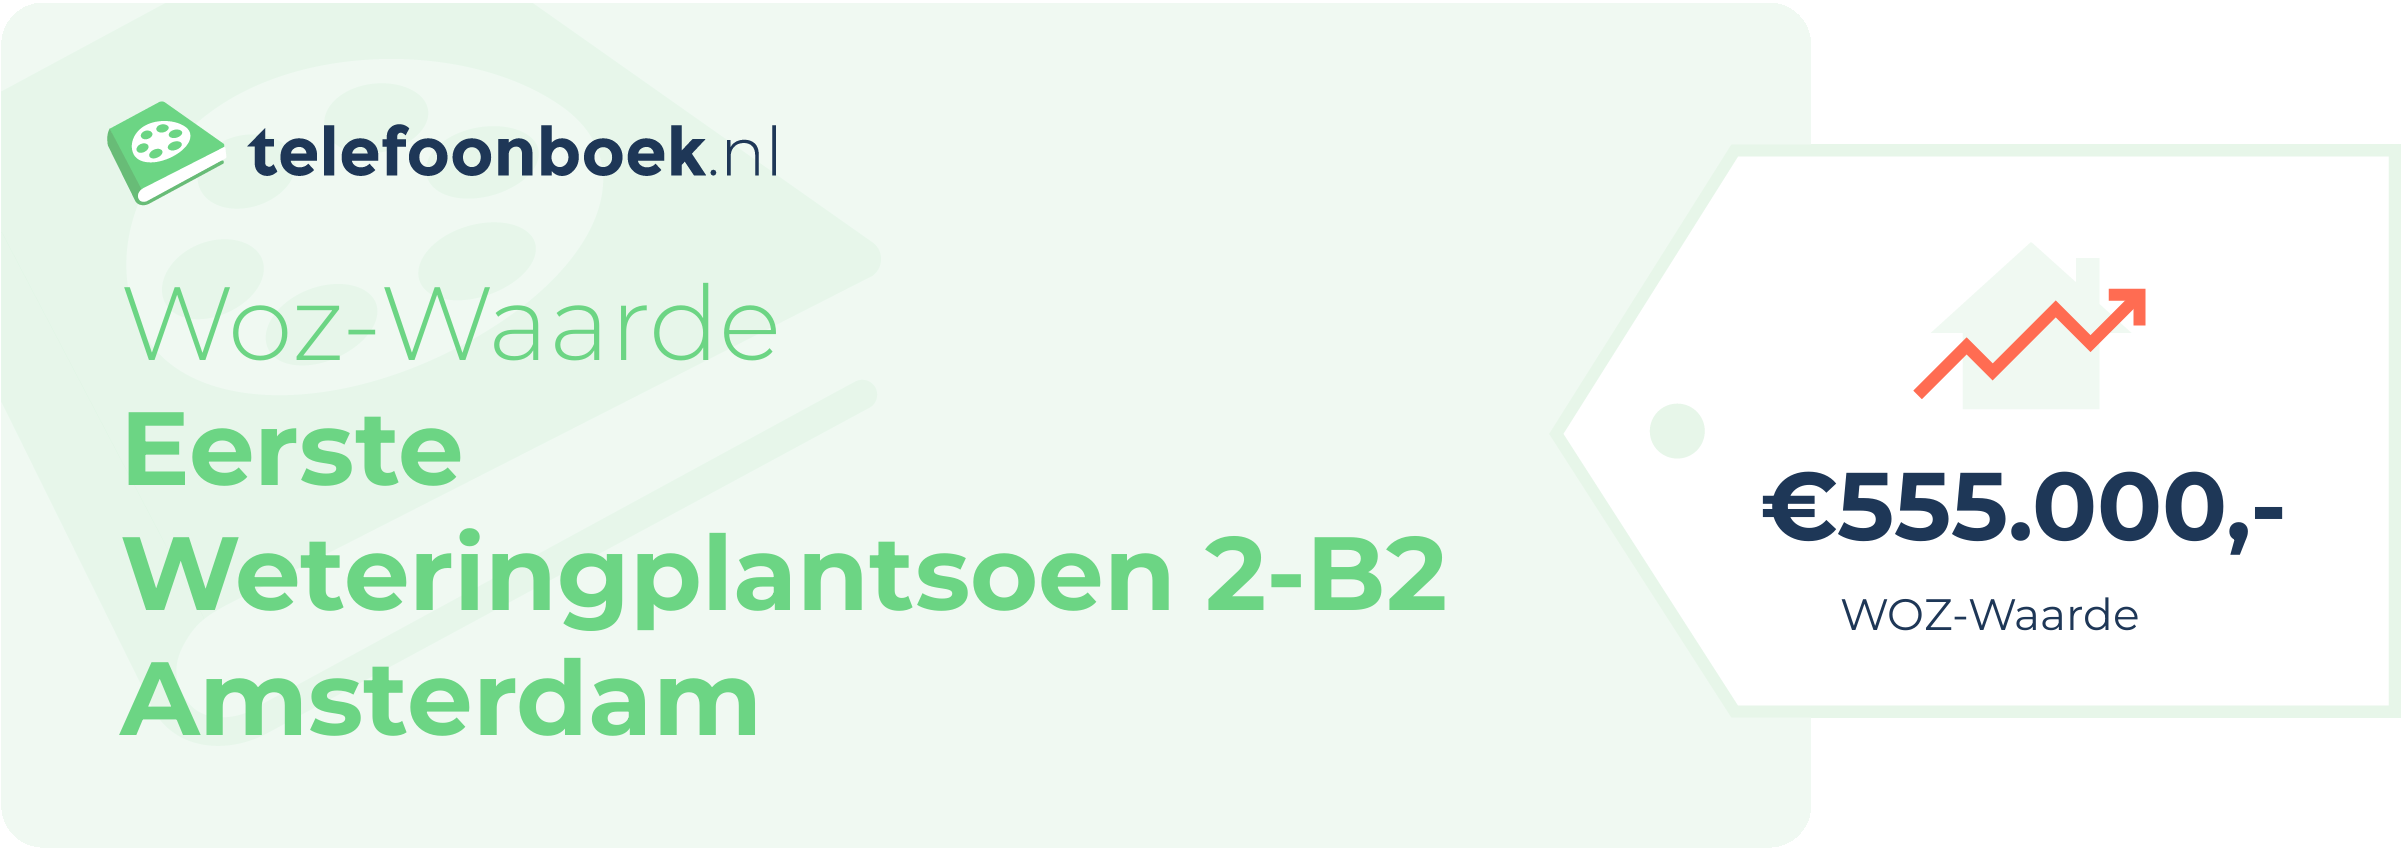 WOZ-waarde Eerste Weteringplantsoen 2-B2 Amsterdam